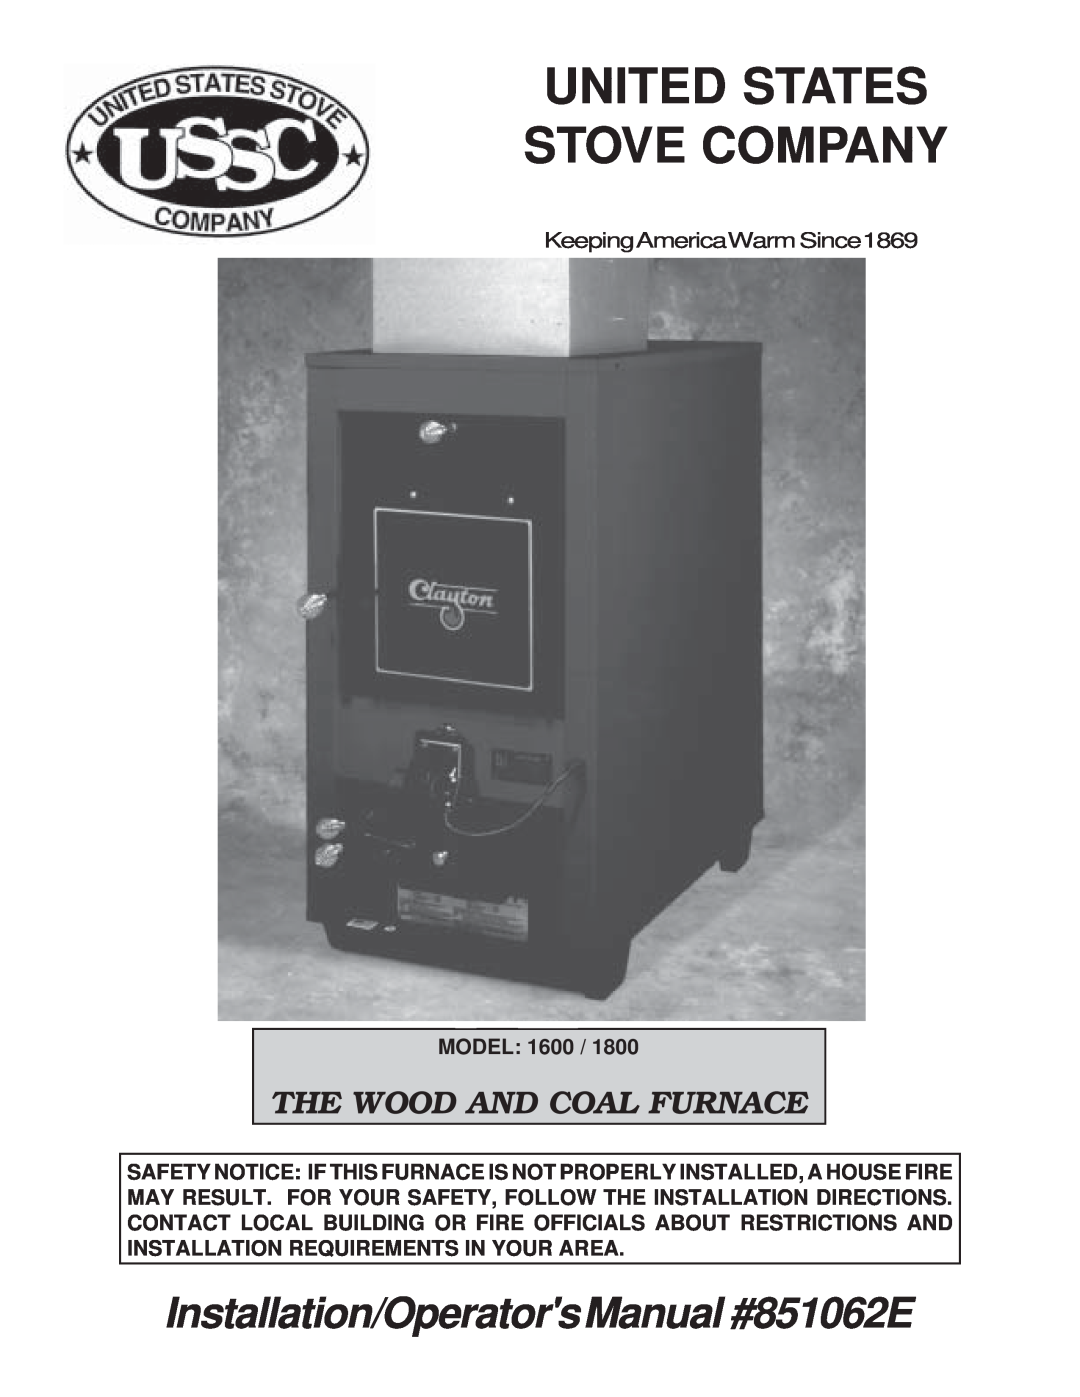 United States Stove 1600, 1800 manual Model, United States Stove Company, Installation/OperatorsManual #851062E 